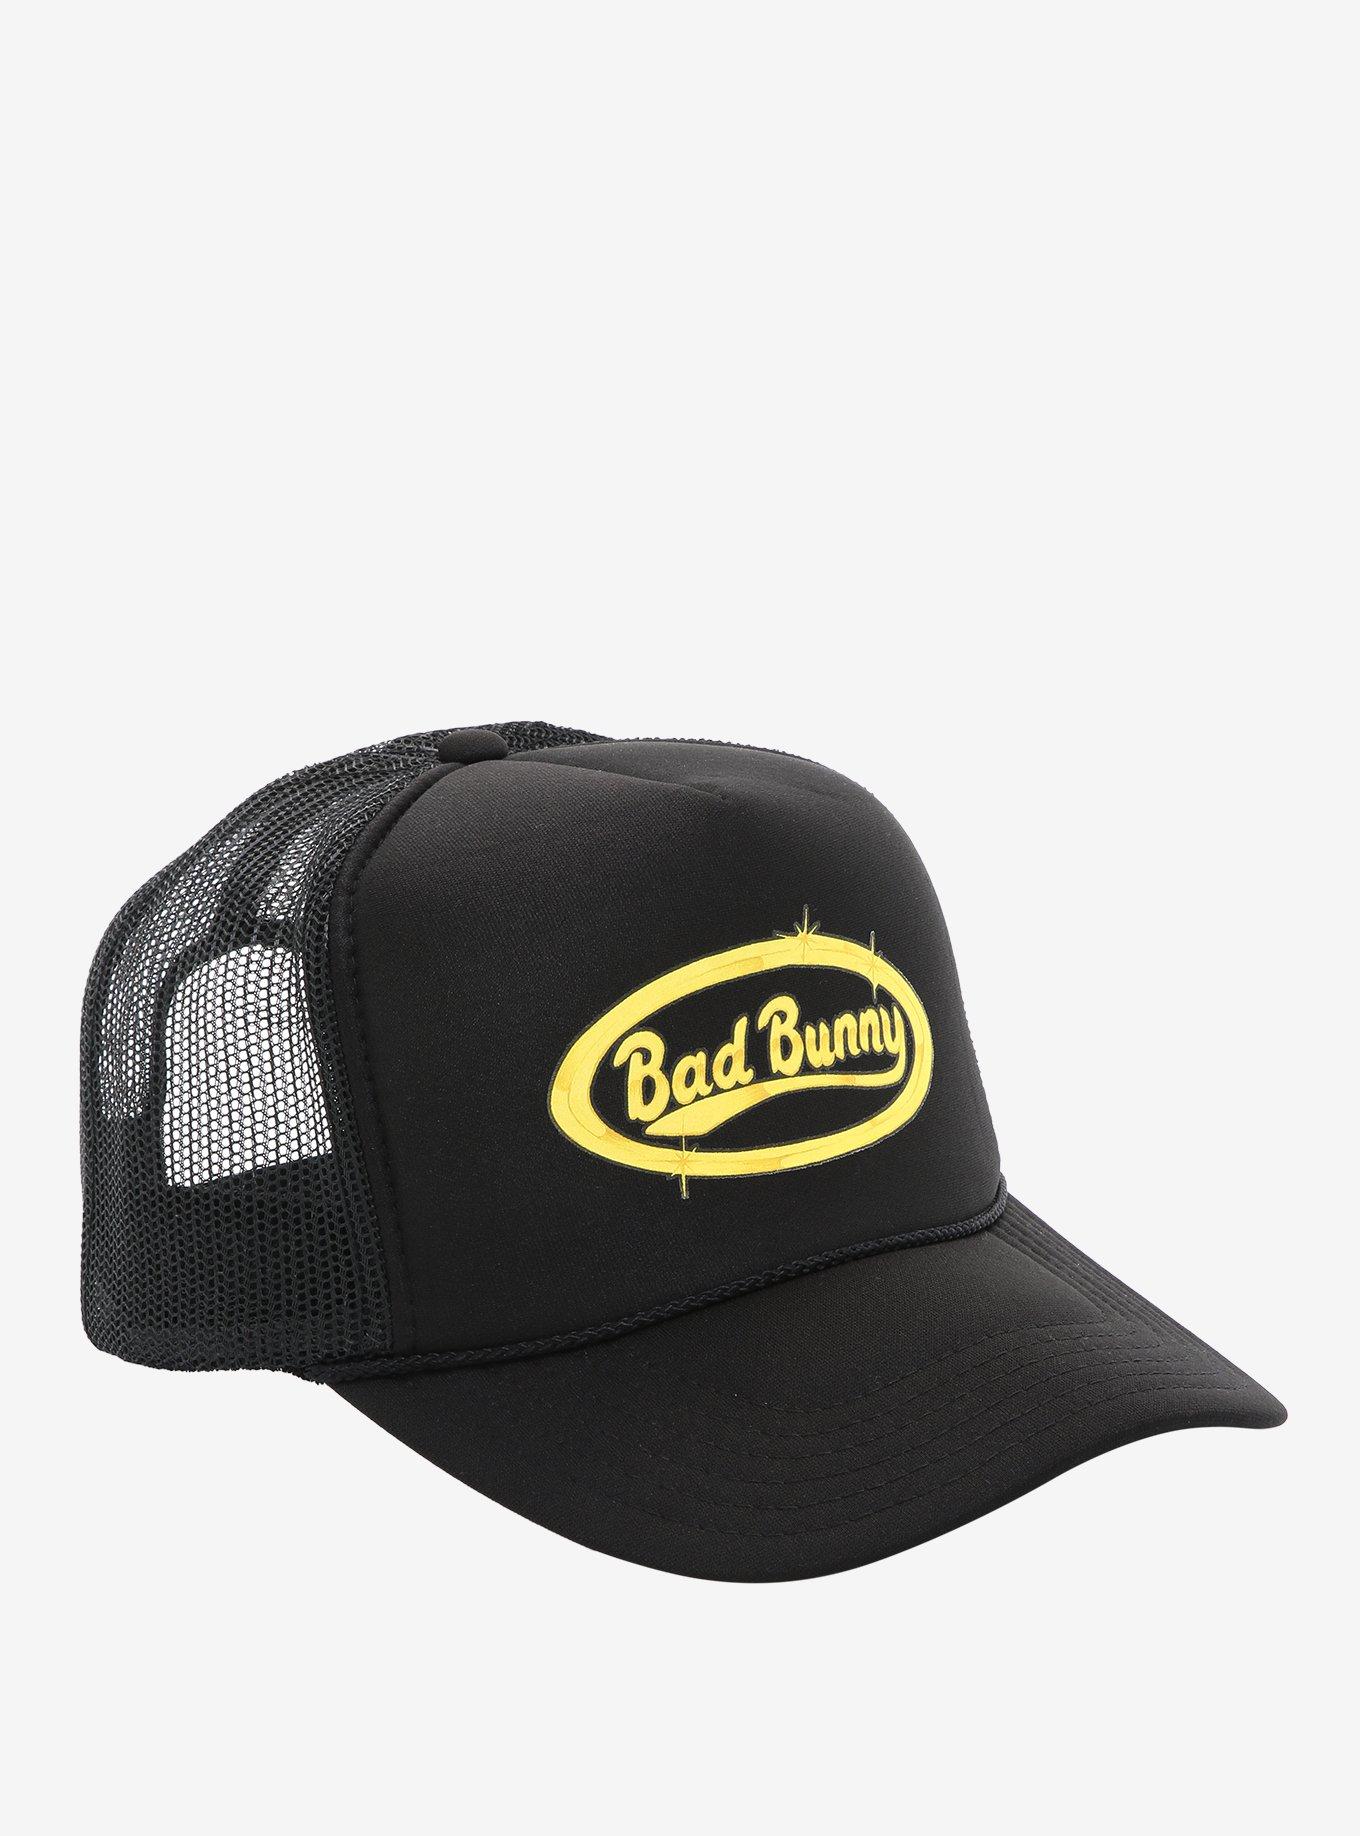 Bad Bunny Trucker Hat